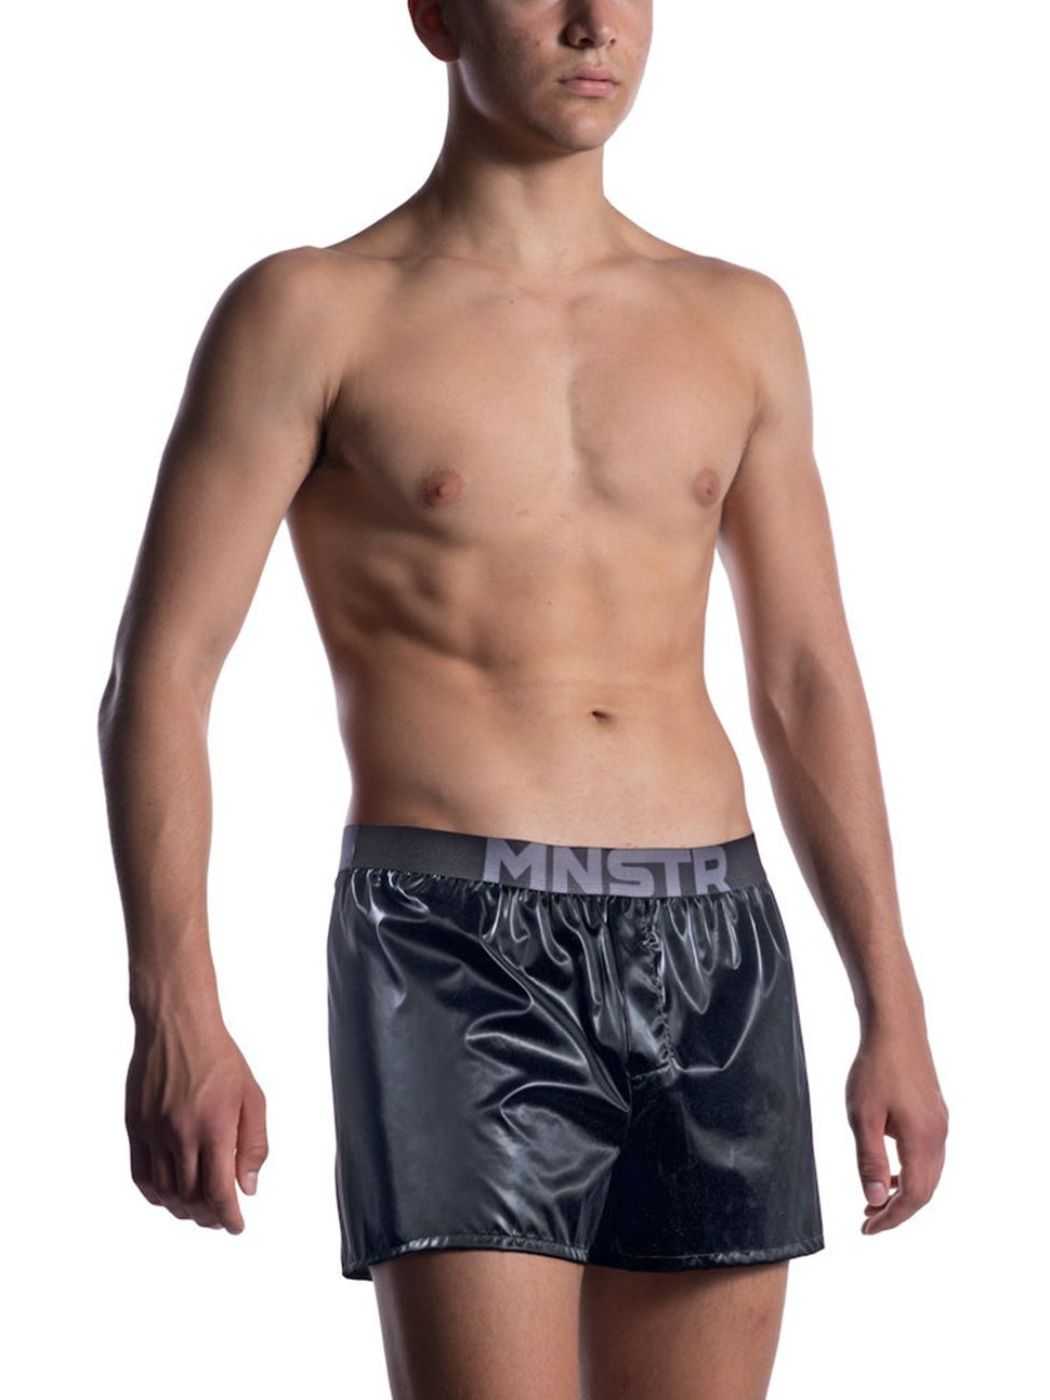 Manstore Boxer Shorts | Black